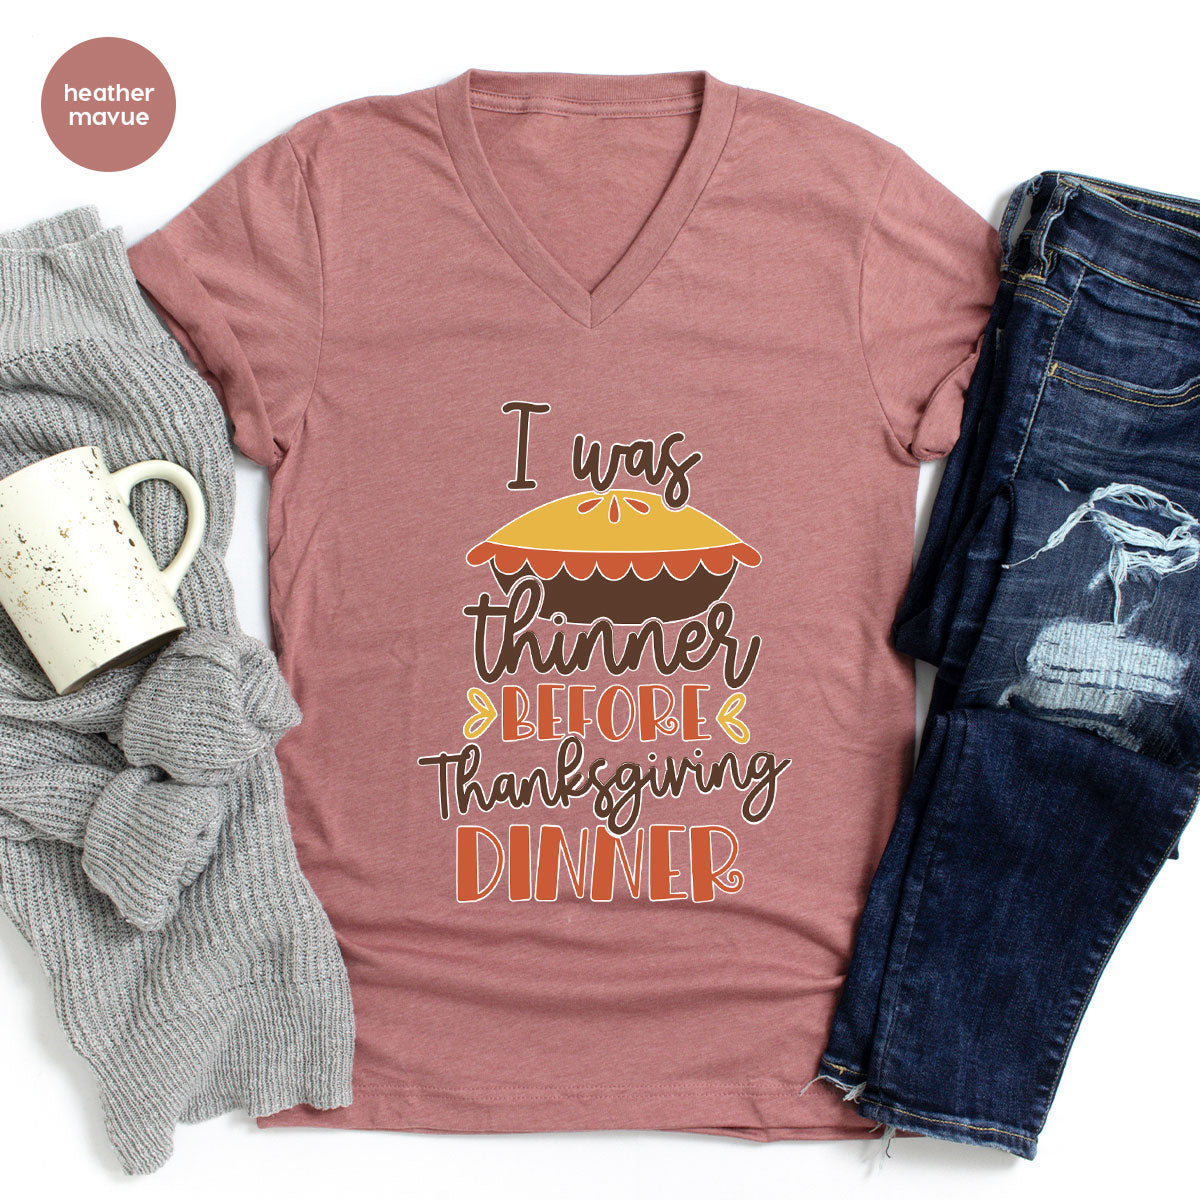 Funny Thanksgiving Shirt, Kids Fall Outfits, Matching Family Shirt, Thanksgiving Gifts, Pumpkin Pie Graphic Tees, Autumn Sweatshirt